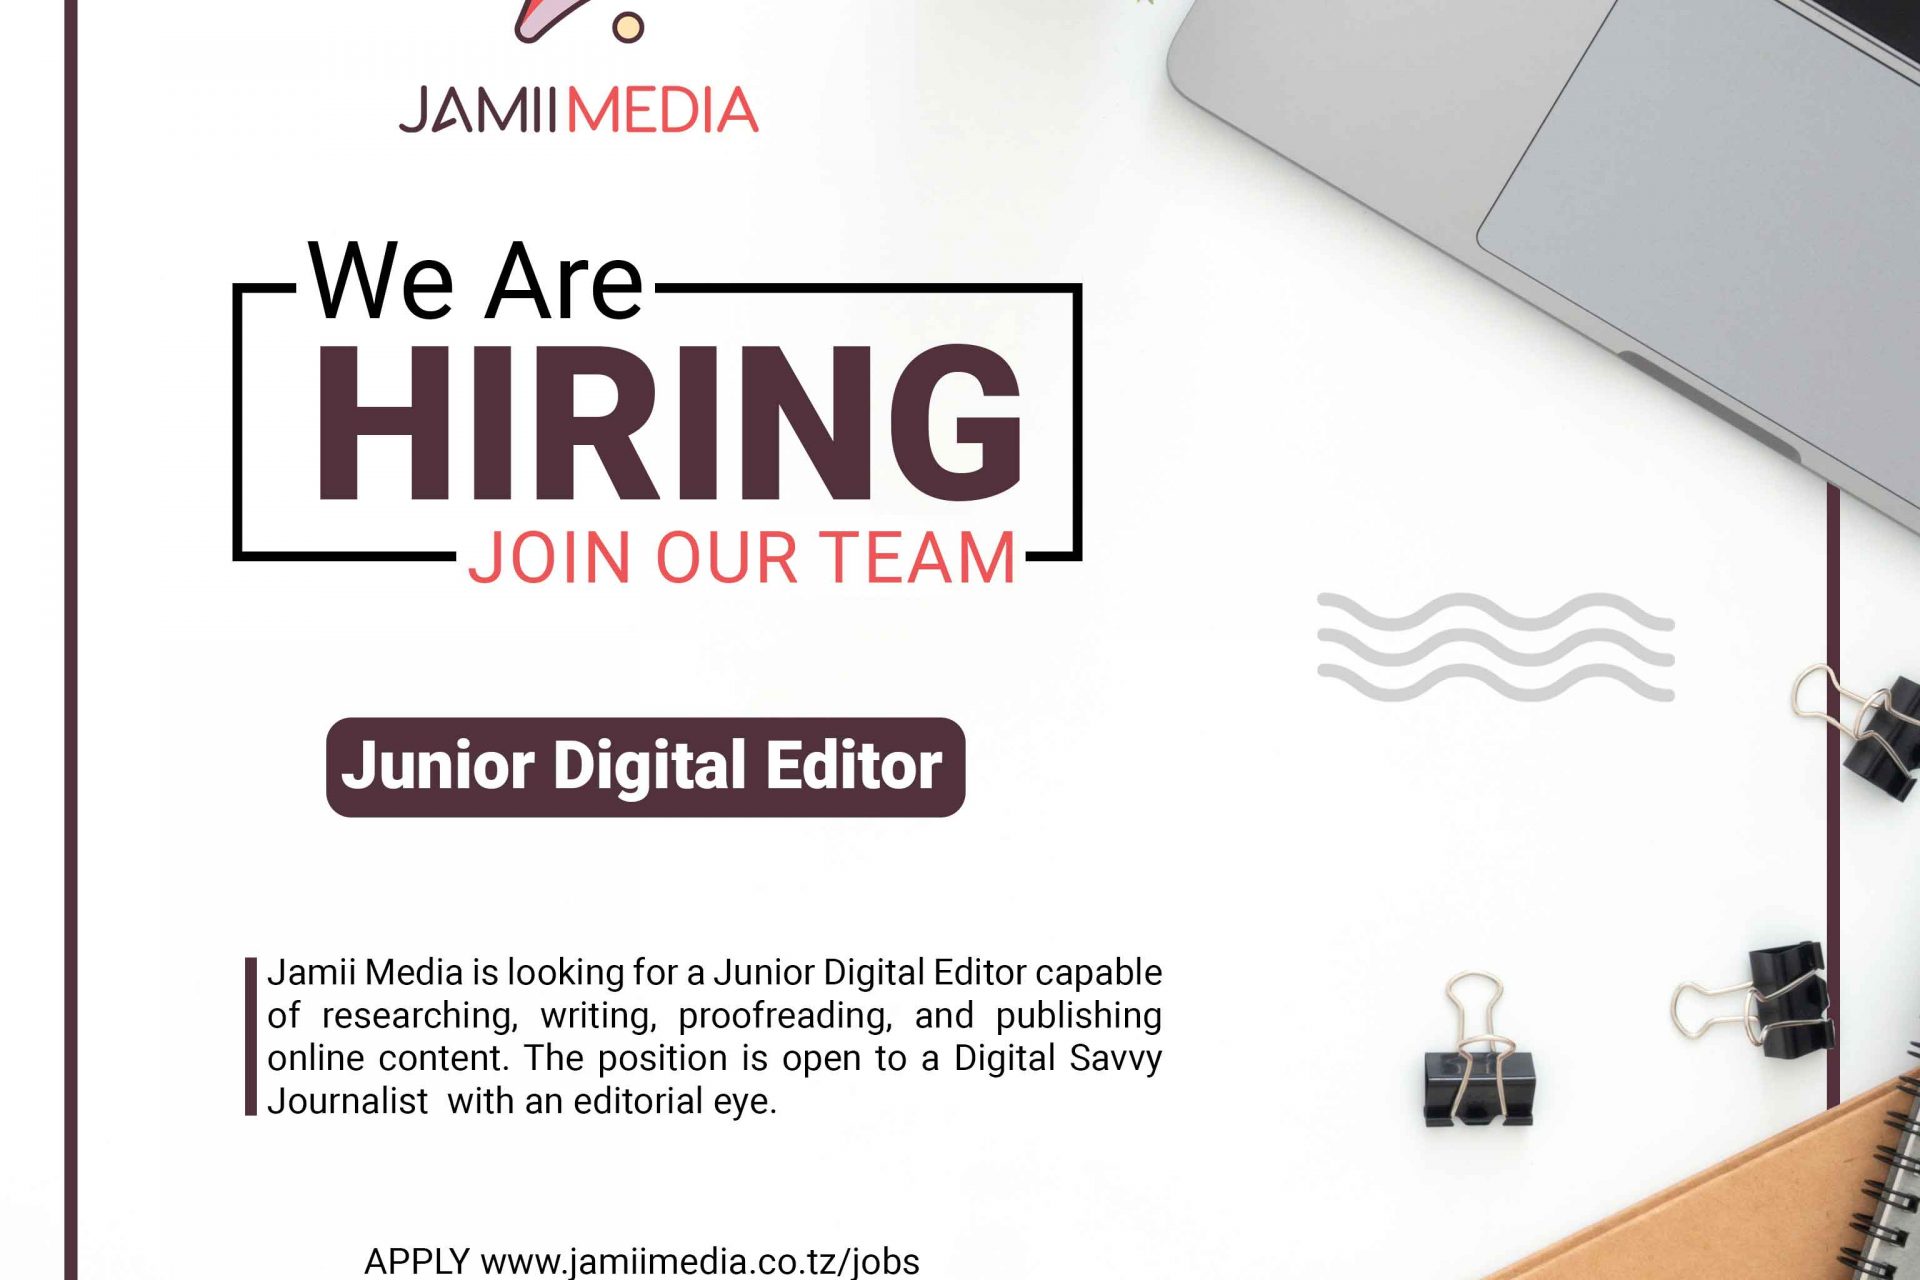 Job Alert: Junior Digital Editor (under a Consultancy Contract)